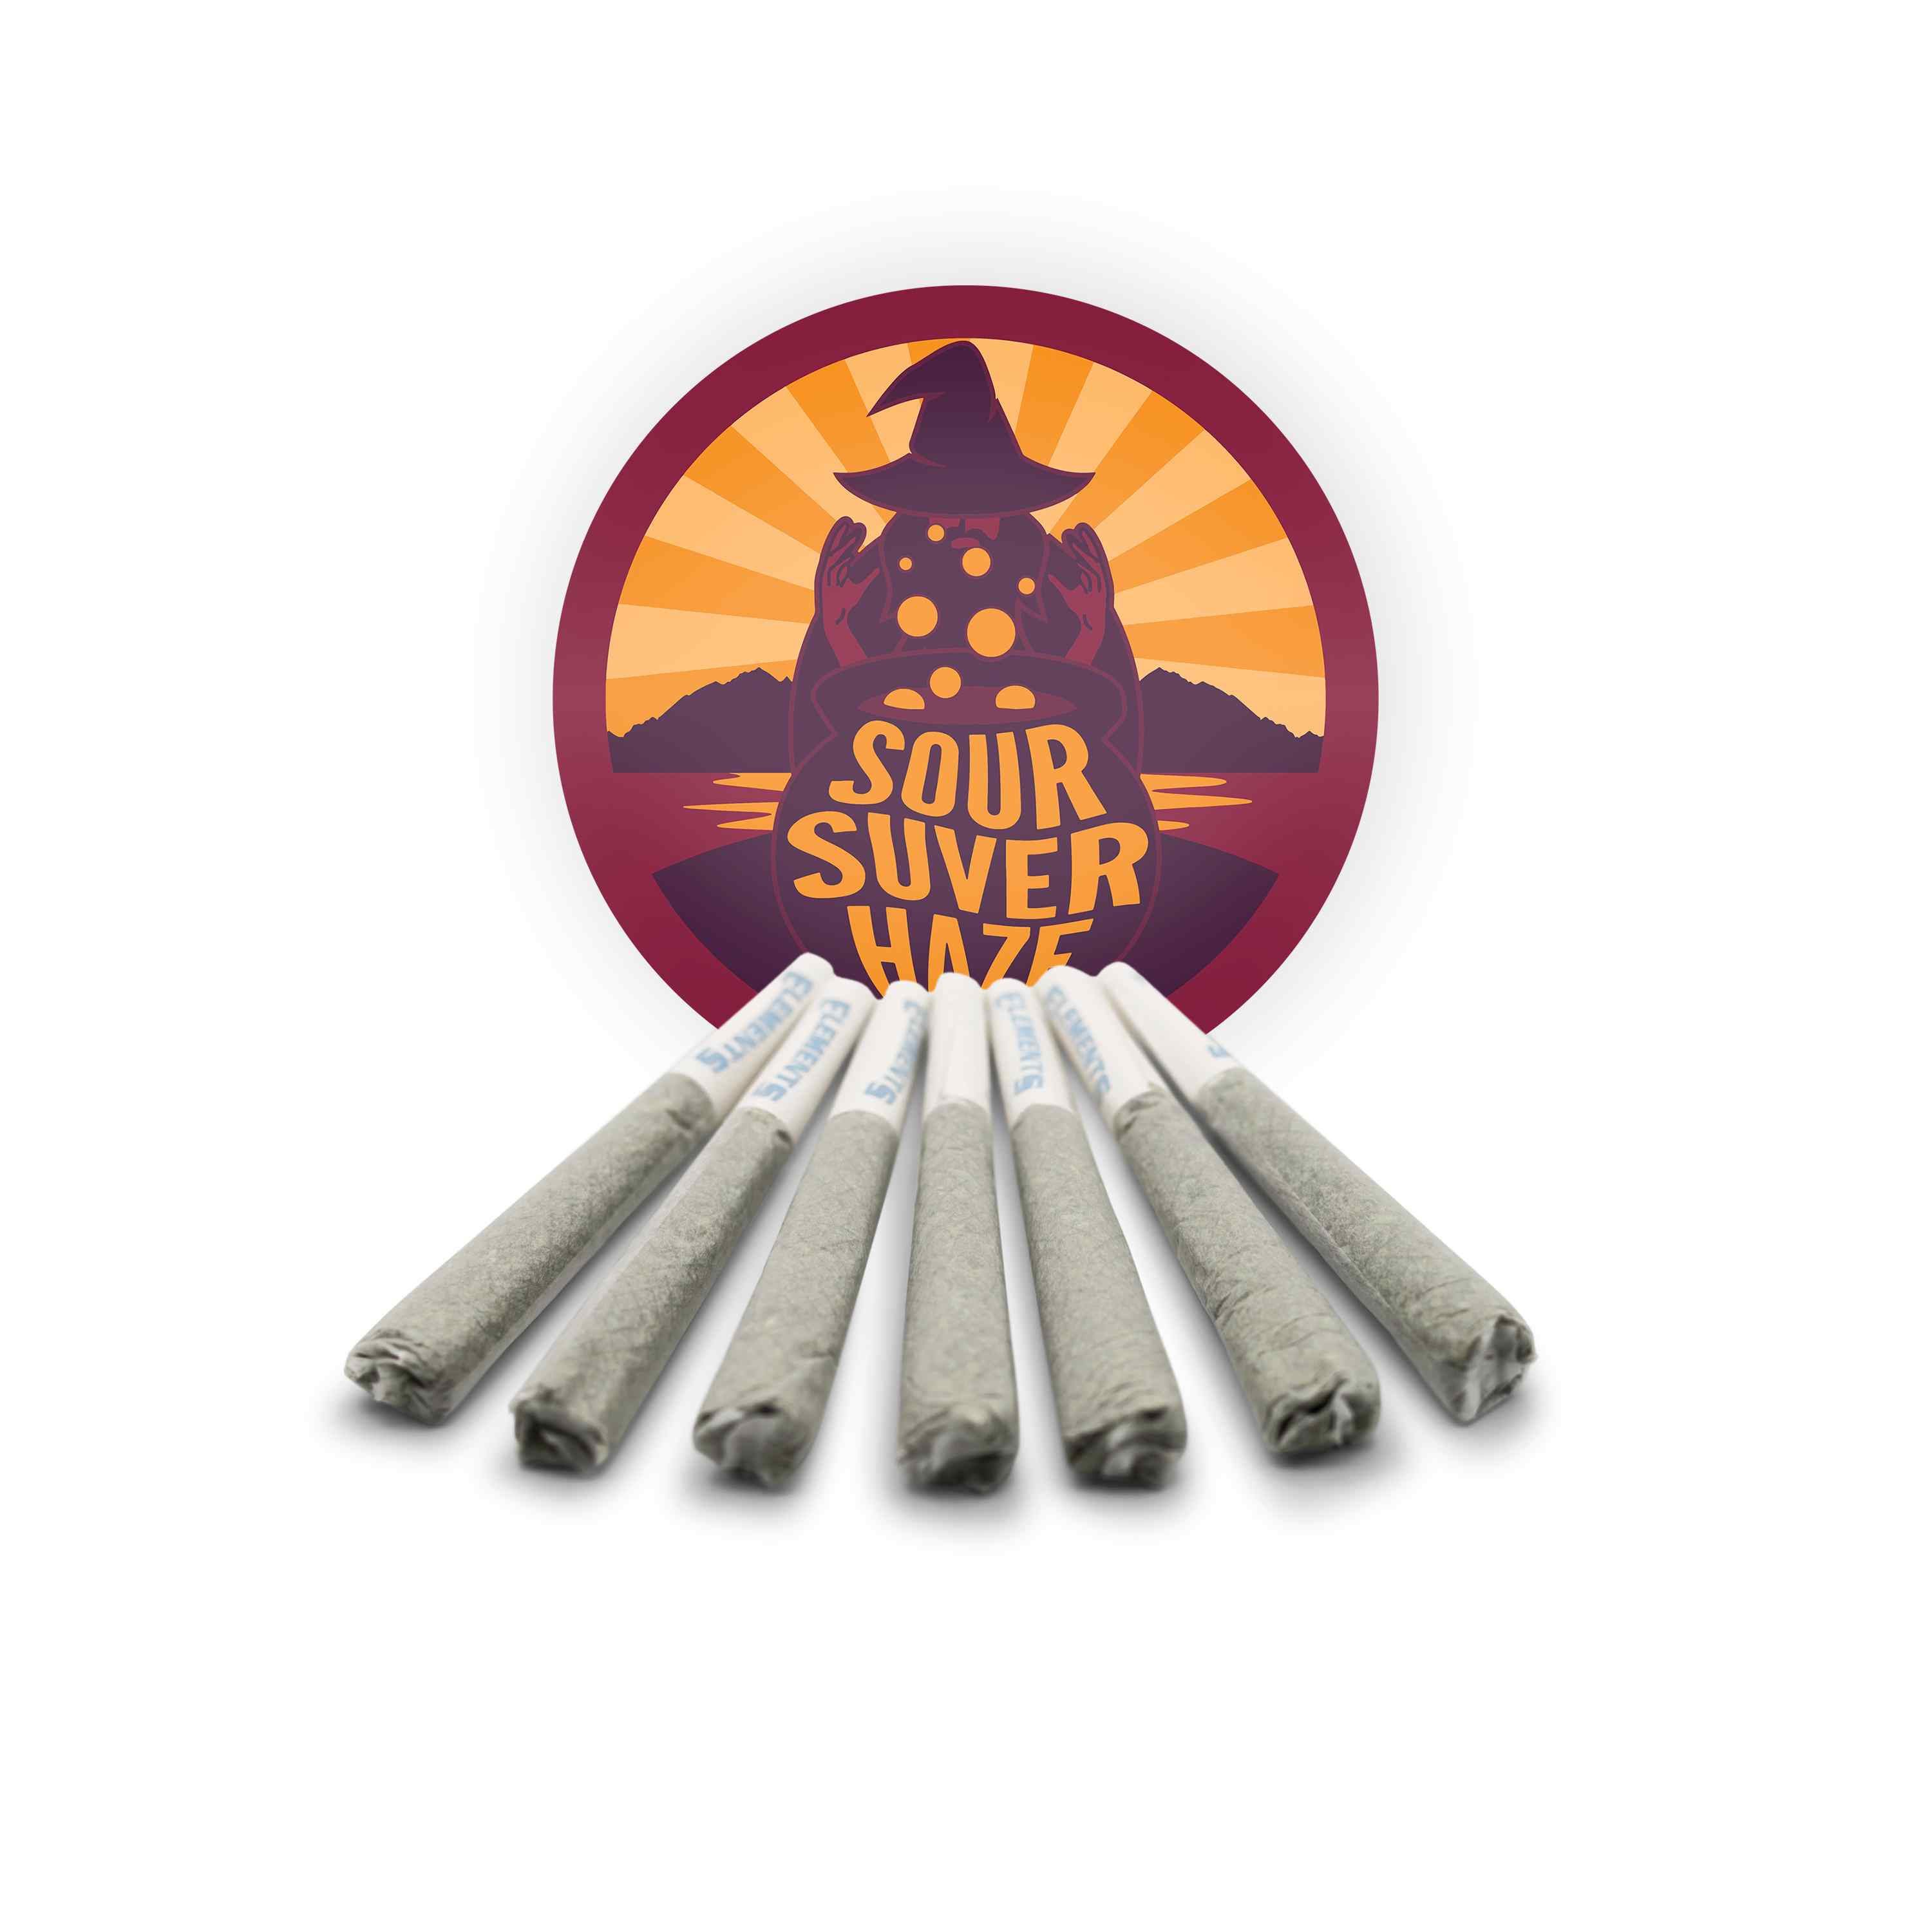 Sour Suver Haze Rogue Rollers - Hemp Prerolls